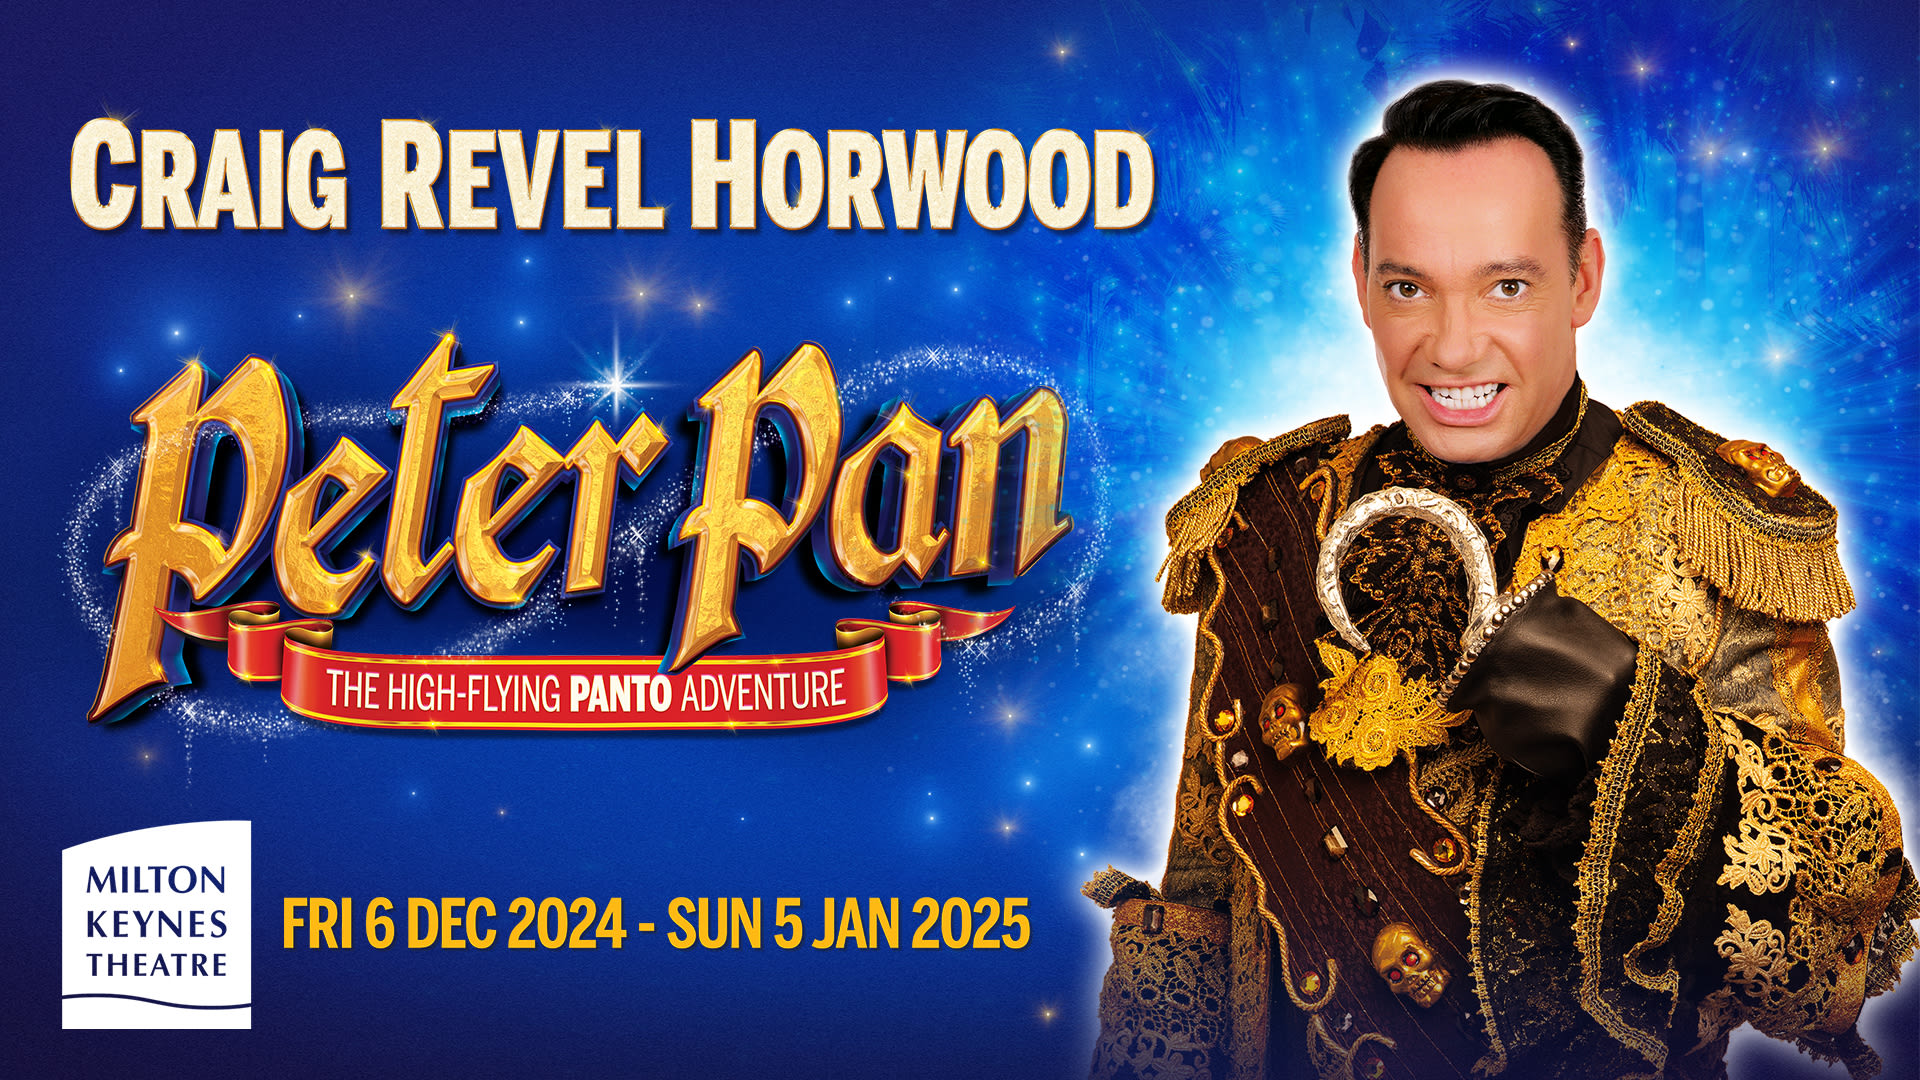 Peter Pan at Milton Keynes Theatre with Craig Revel Horwood poster